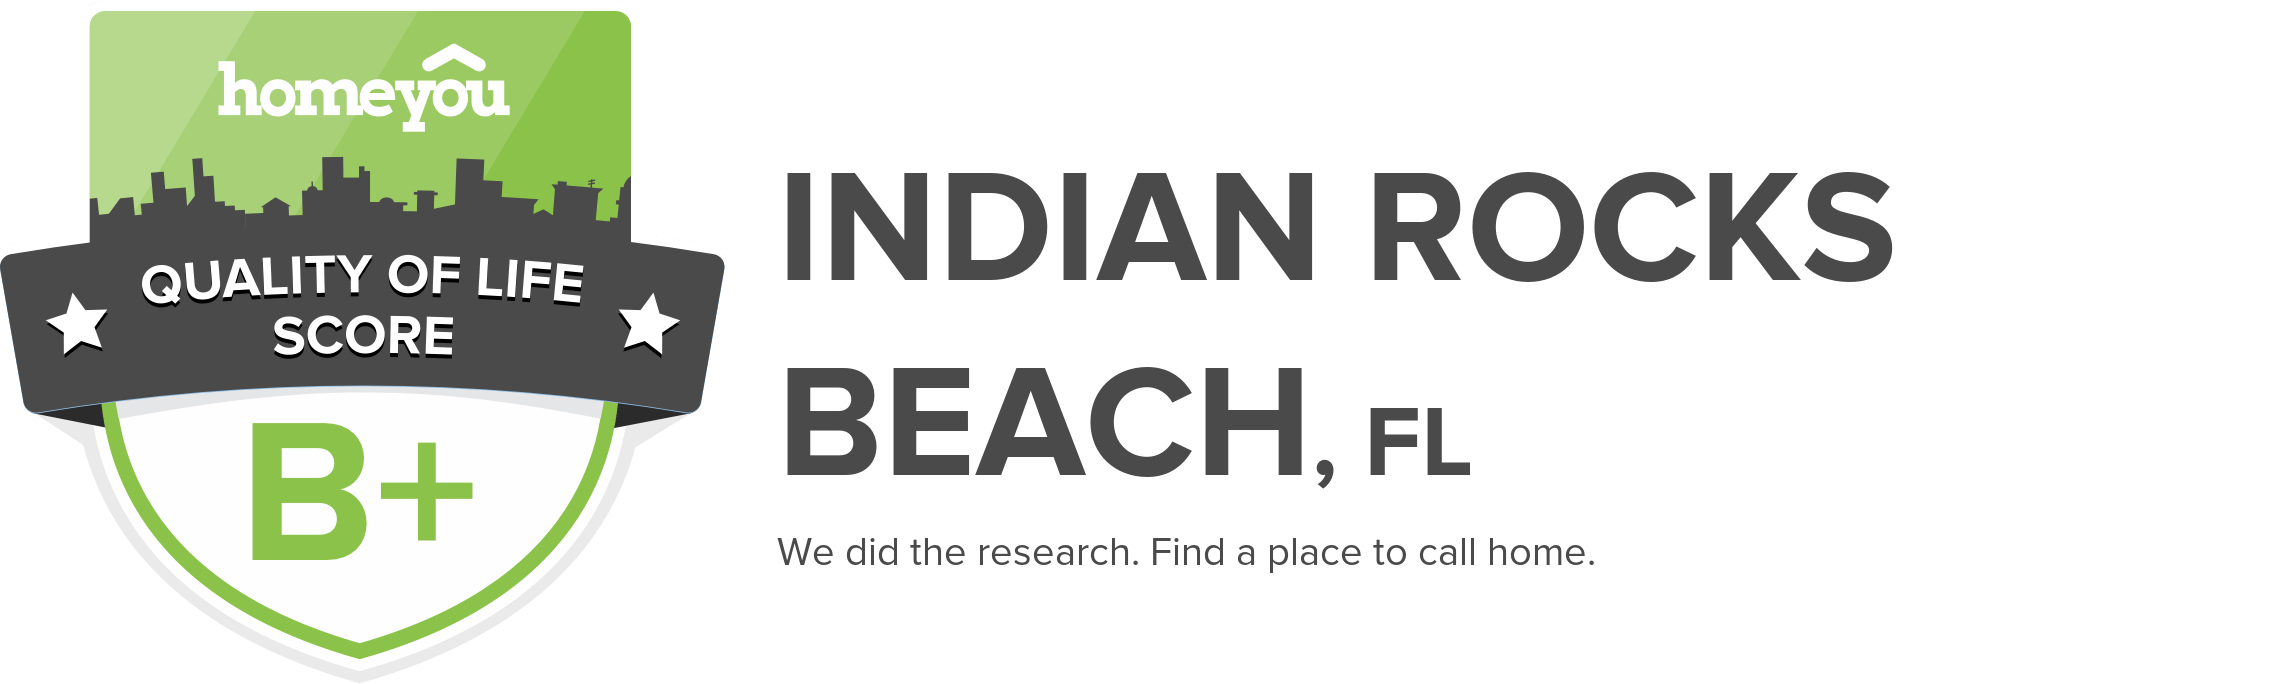 Indian Rocks Beach, FL